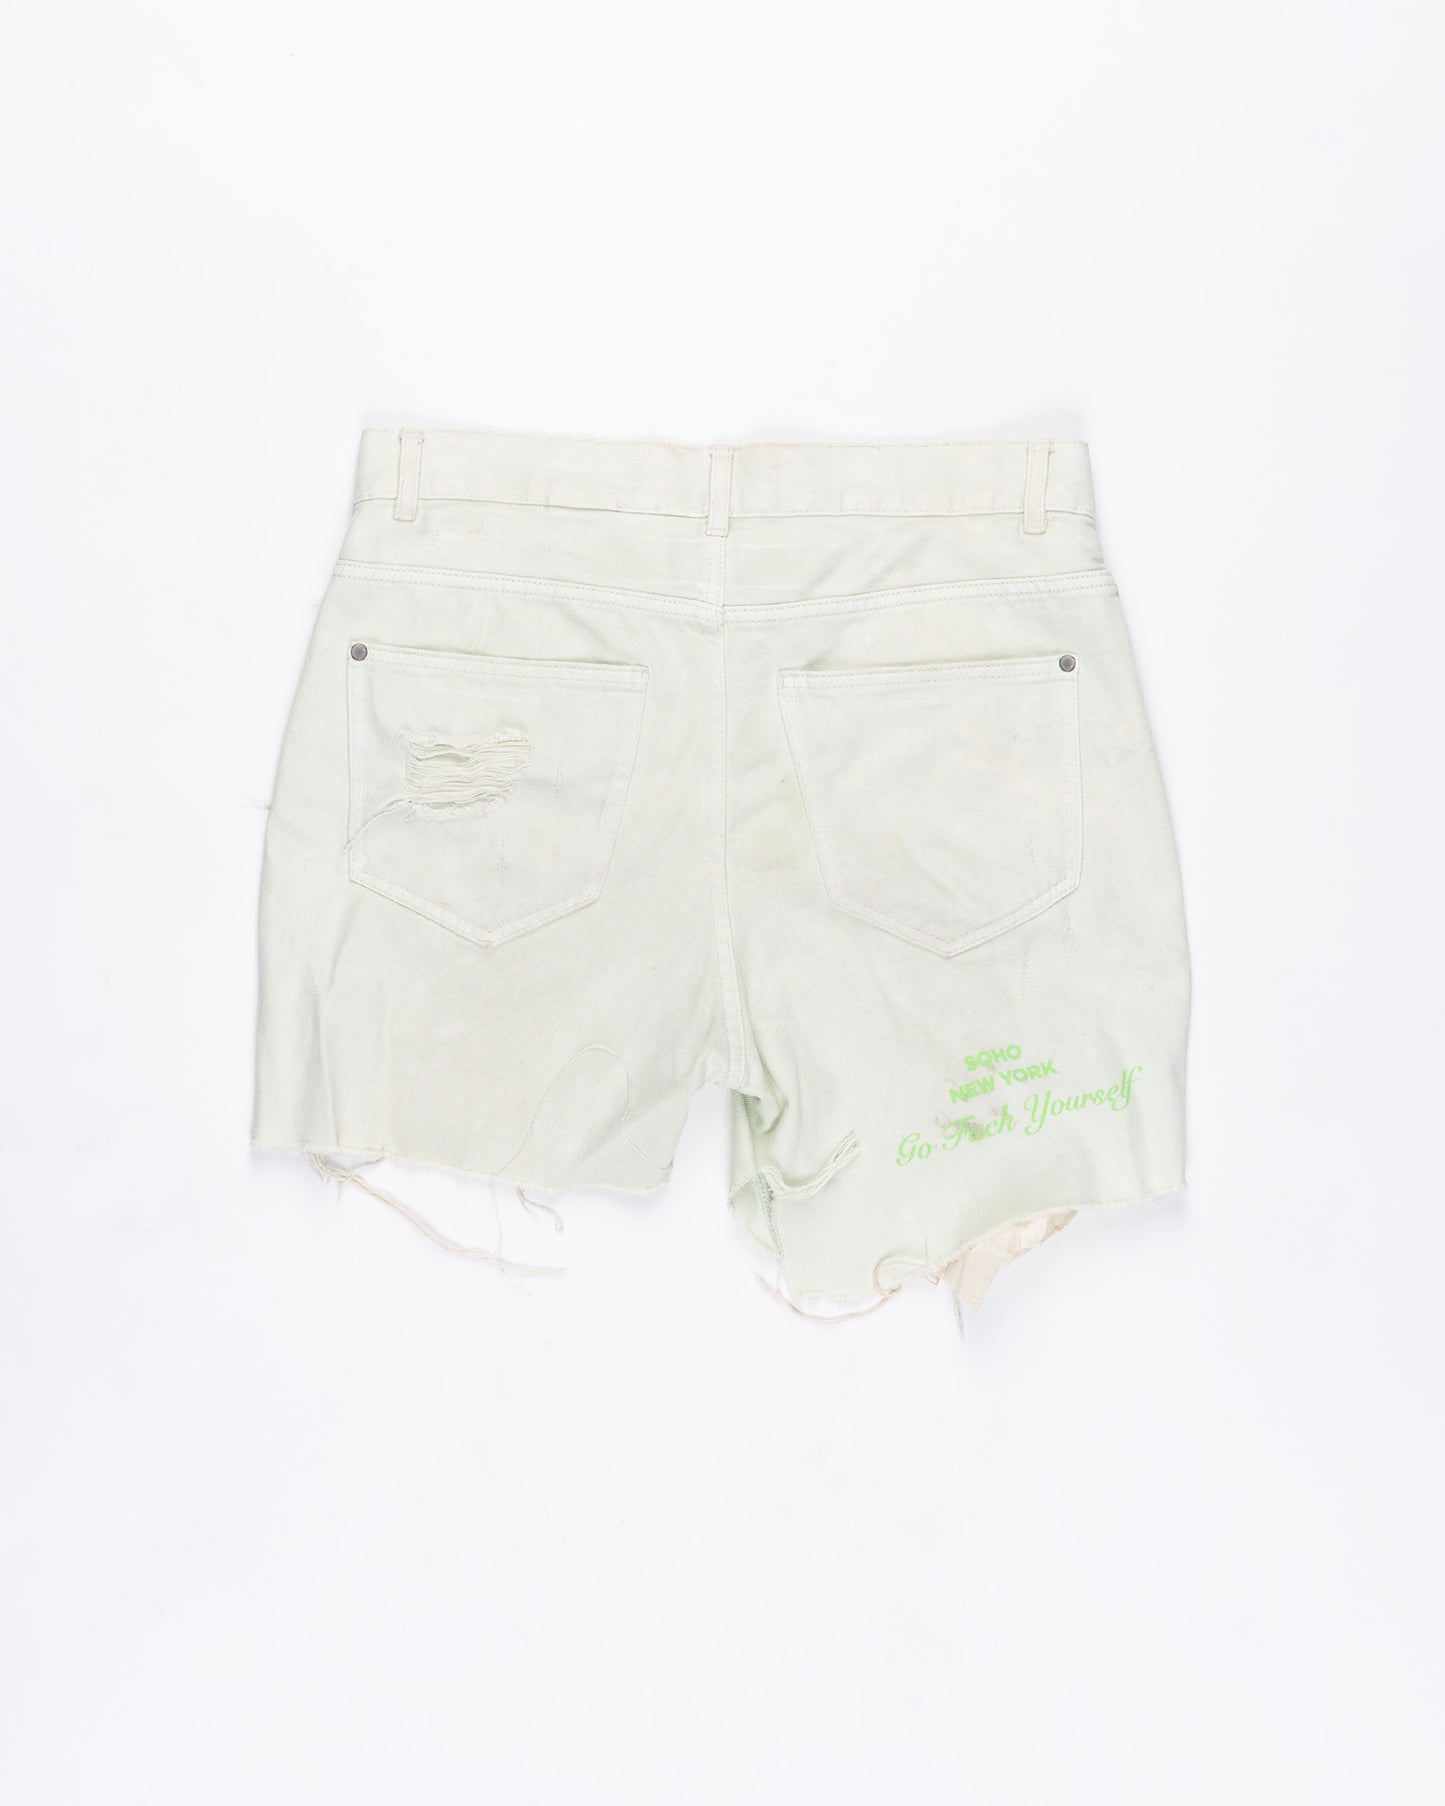 Light Green Cut Off Shorts Size: 34